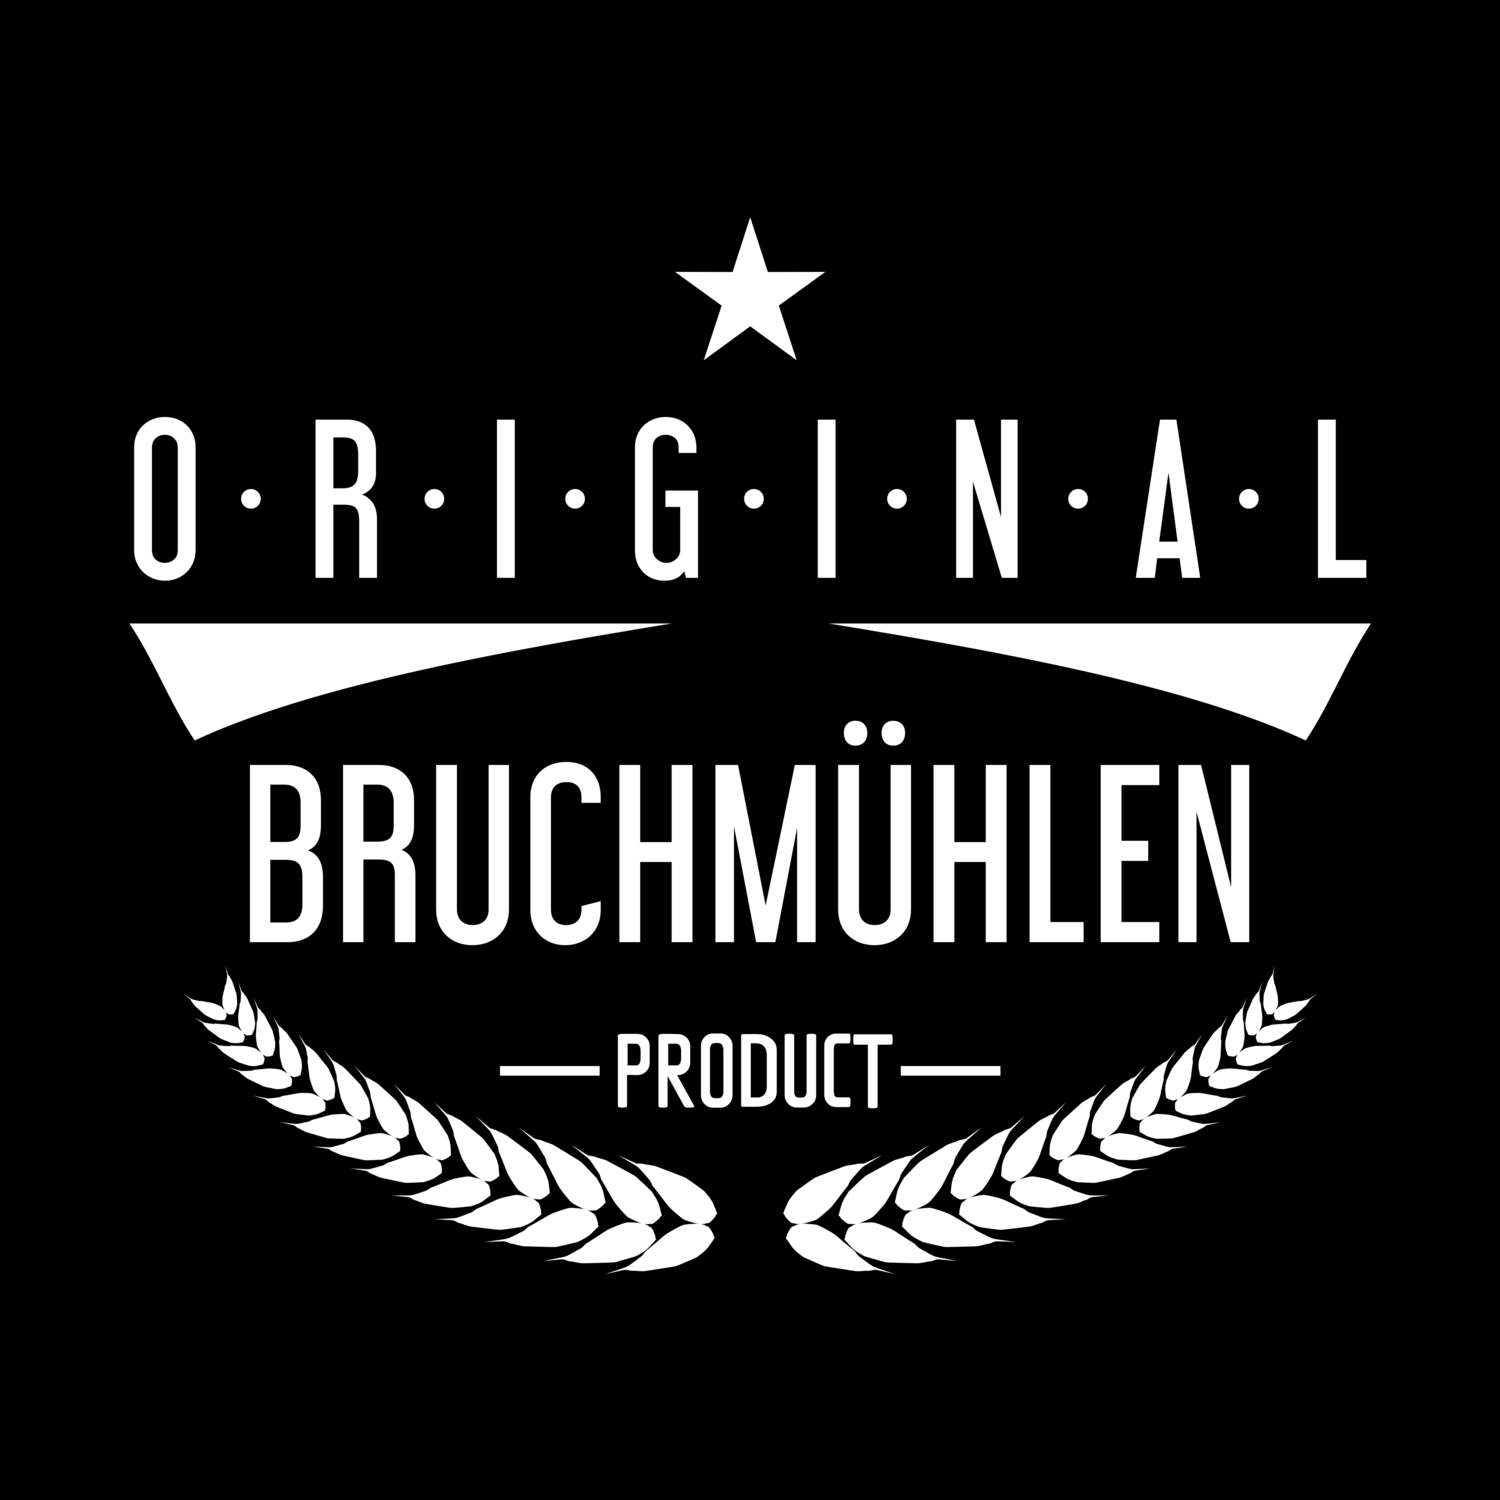 Bruchmühlen T-Shirt »Original Product«